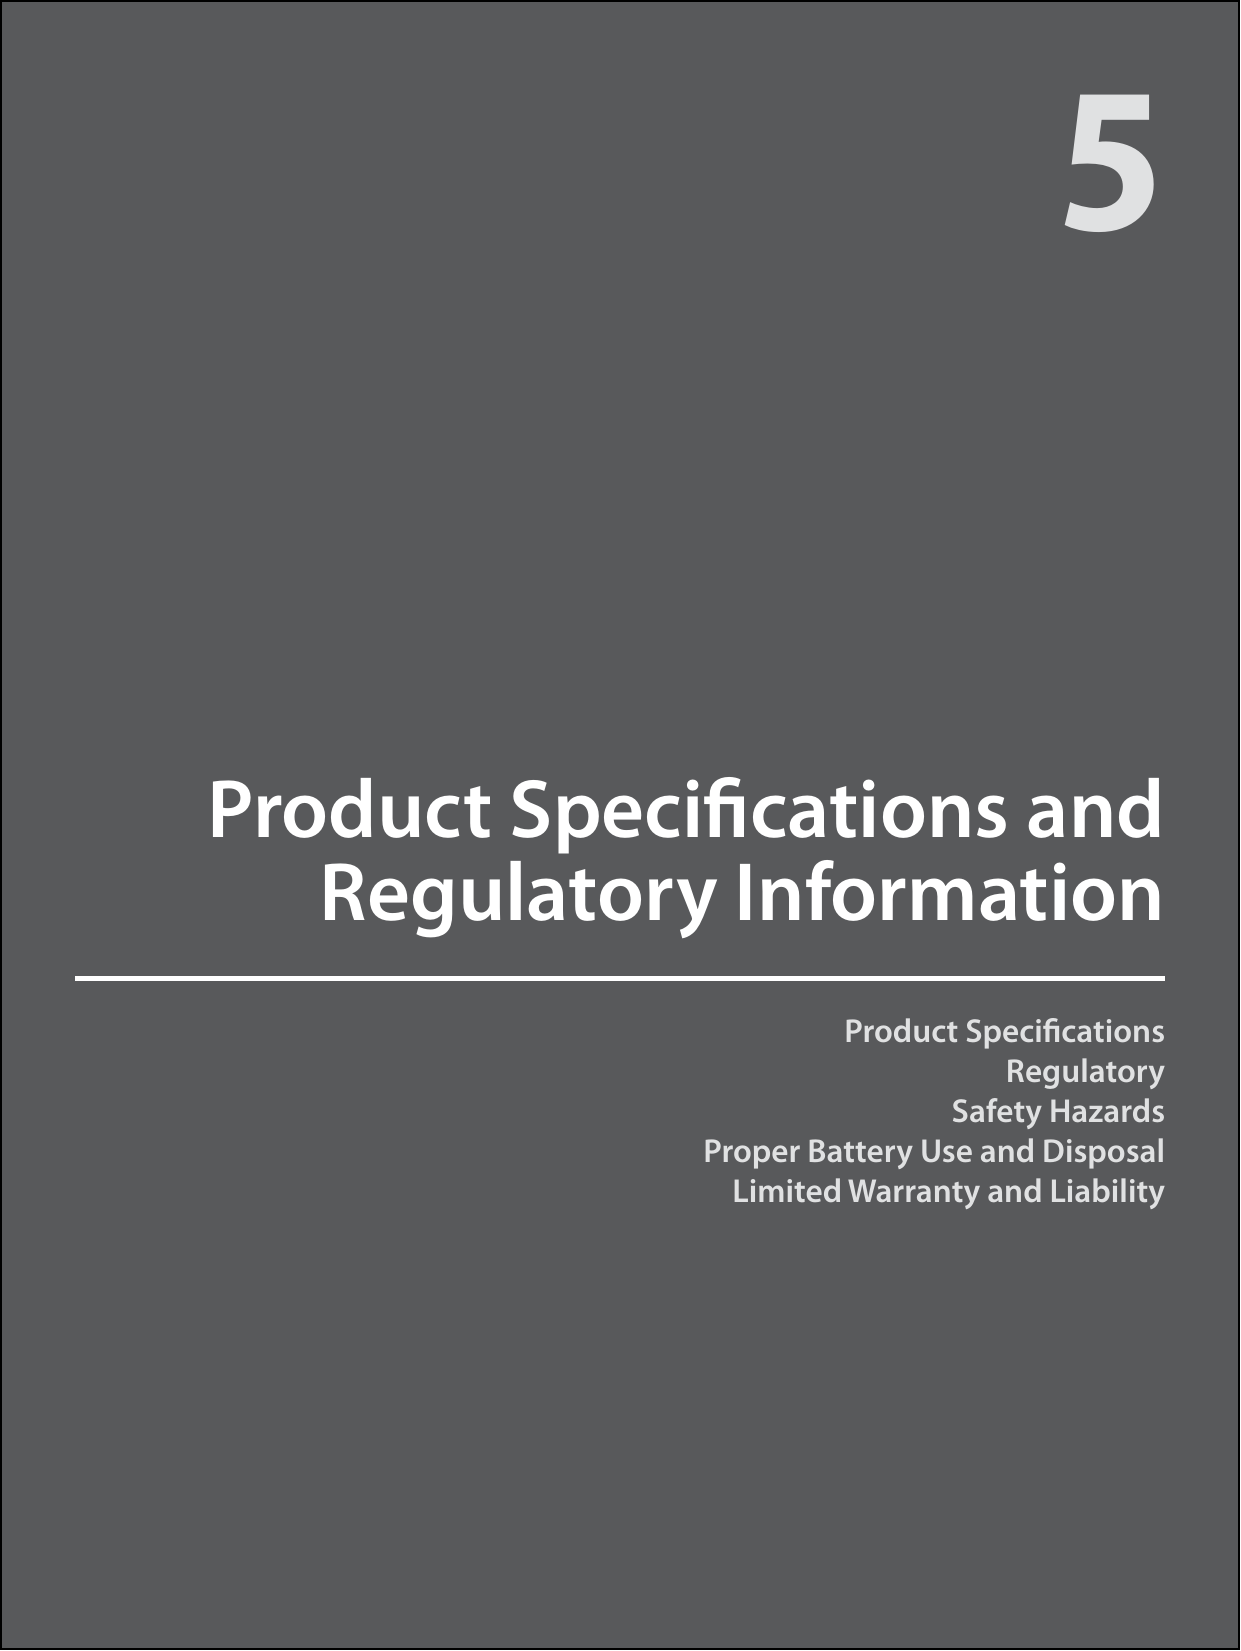 Product SpecicationsRegulatorySafety HazardsProper Battery Use and DisposalLimited Warranty and LiabilityProduct Specications and Regulatory Information5